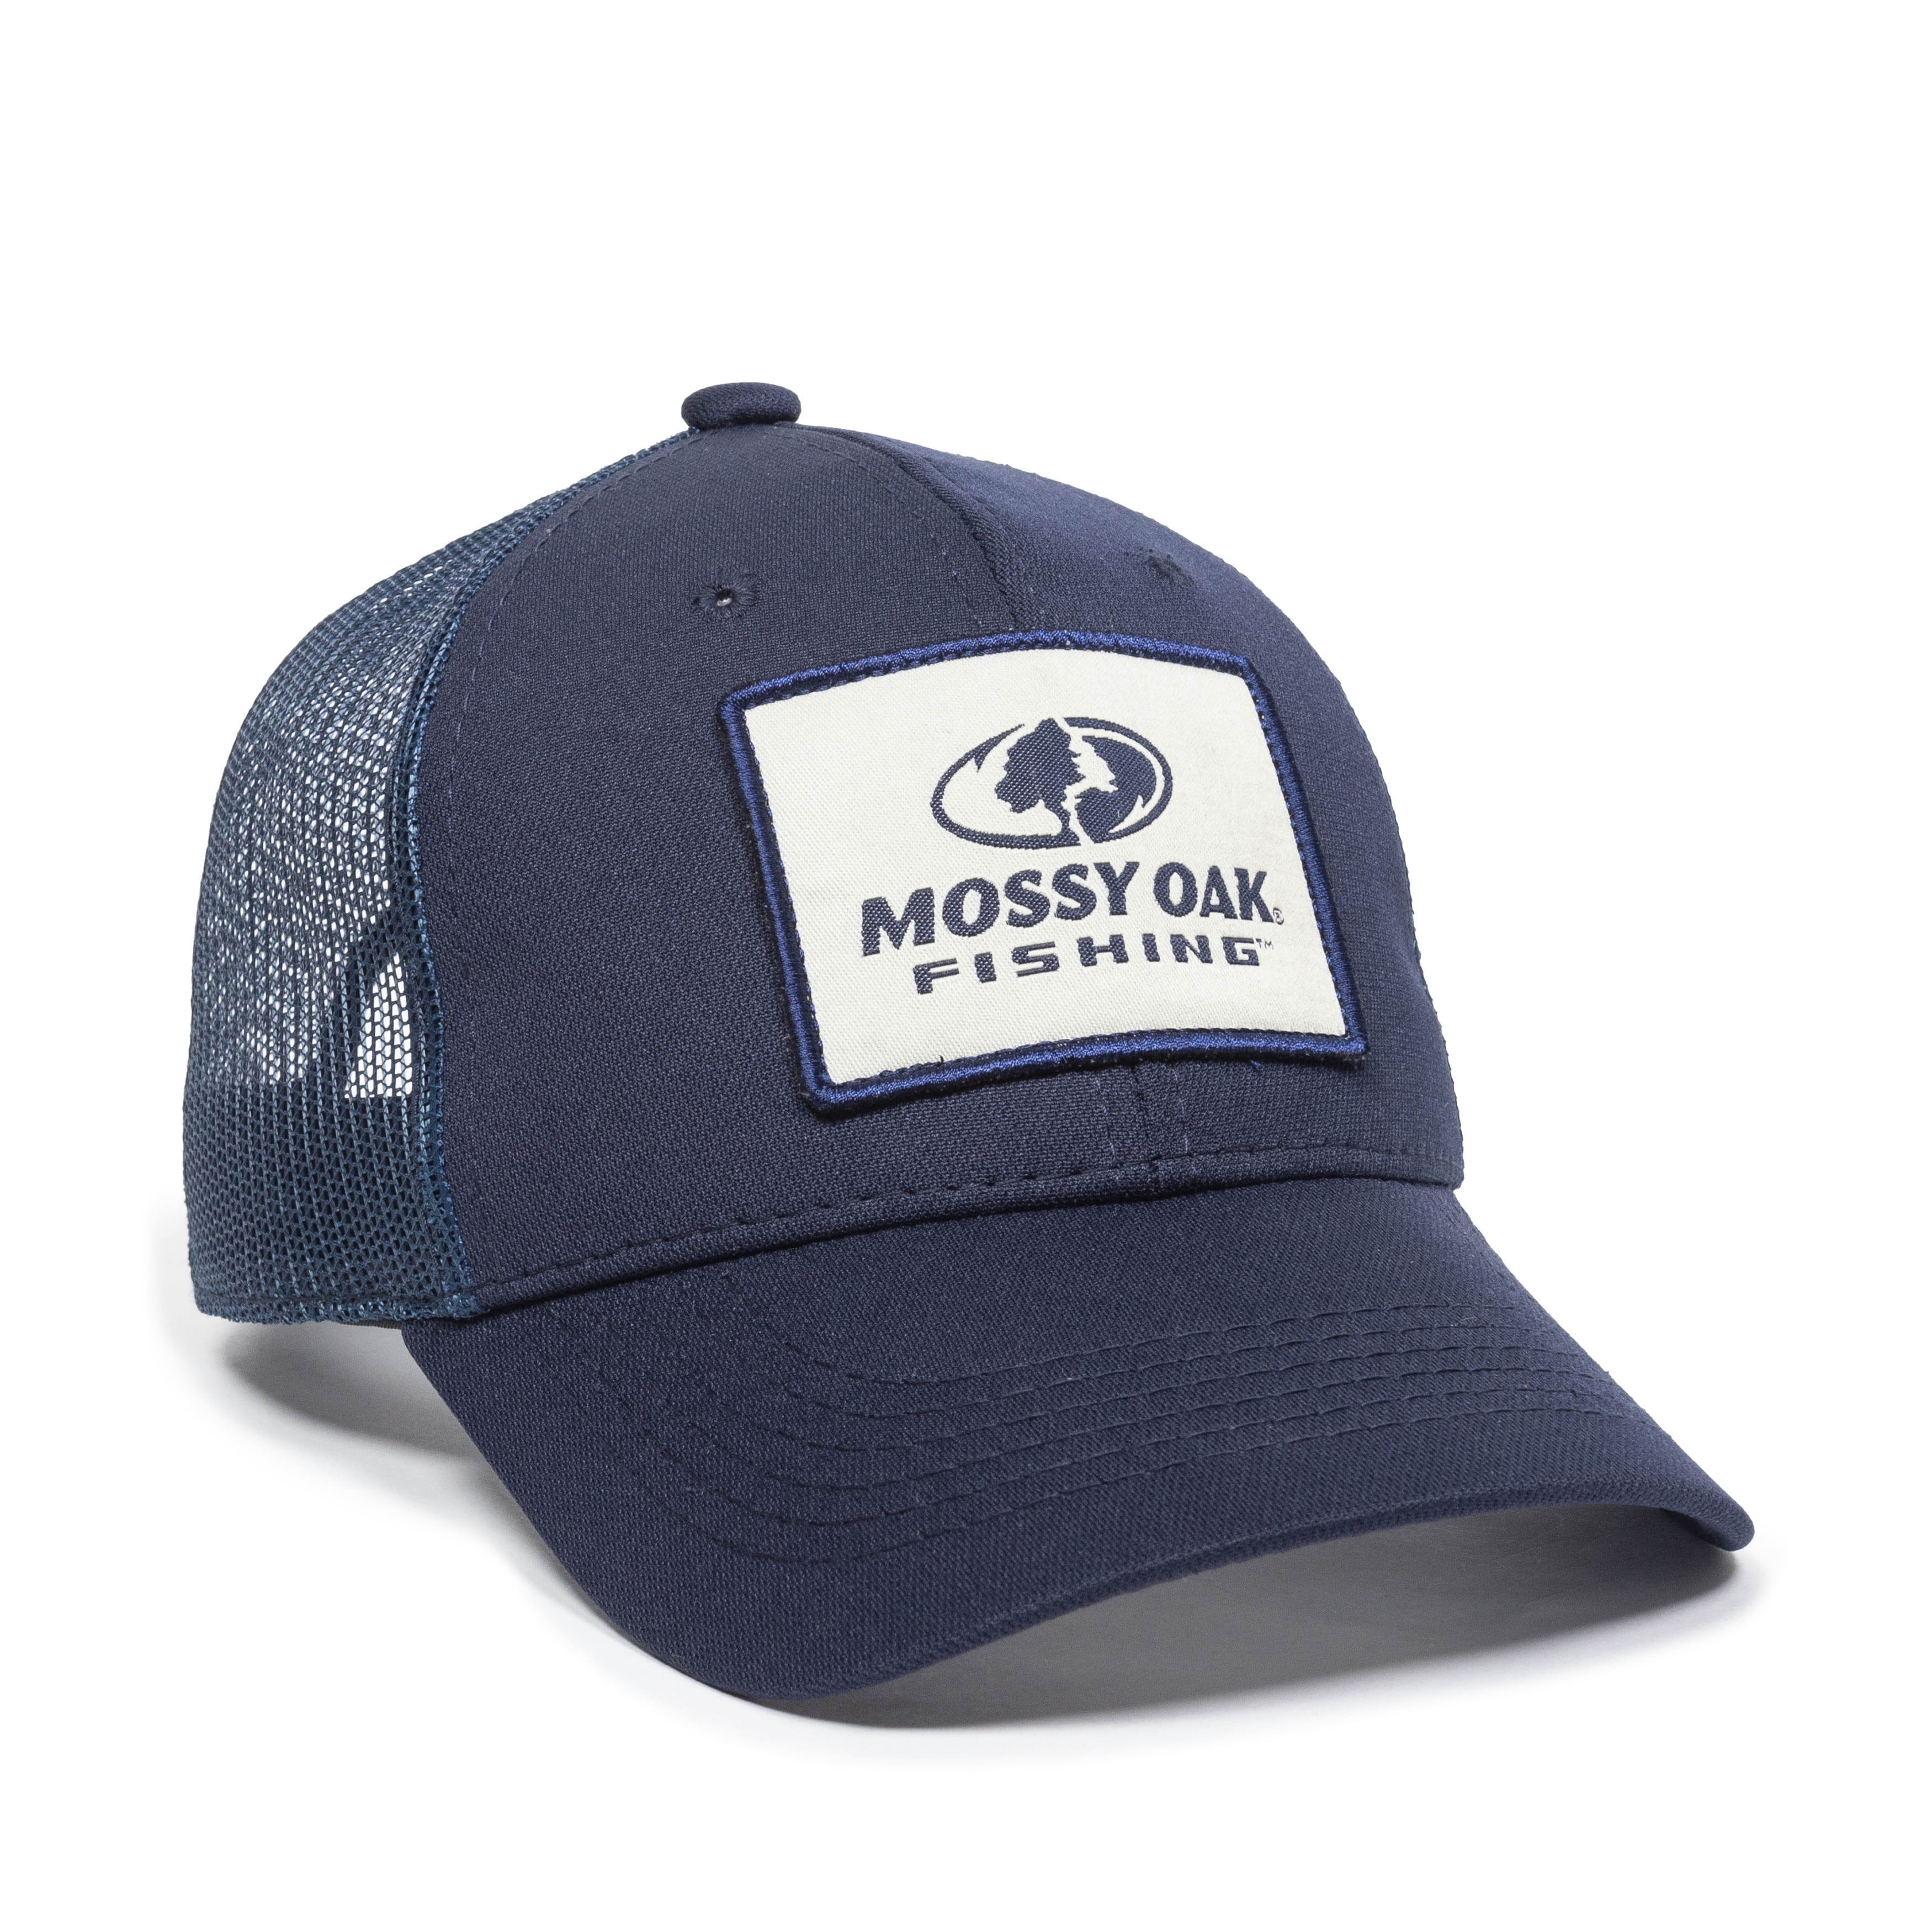 Mossy Oak Fishing Structured Baseball Style Hat, Navy, Adult 